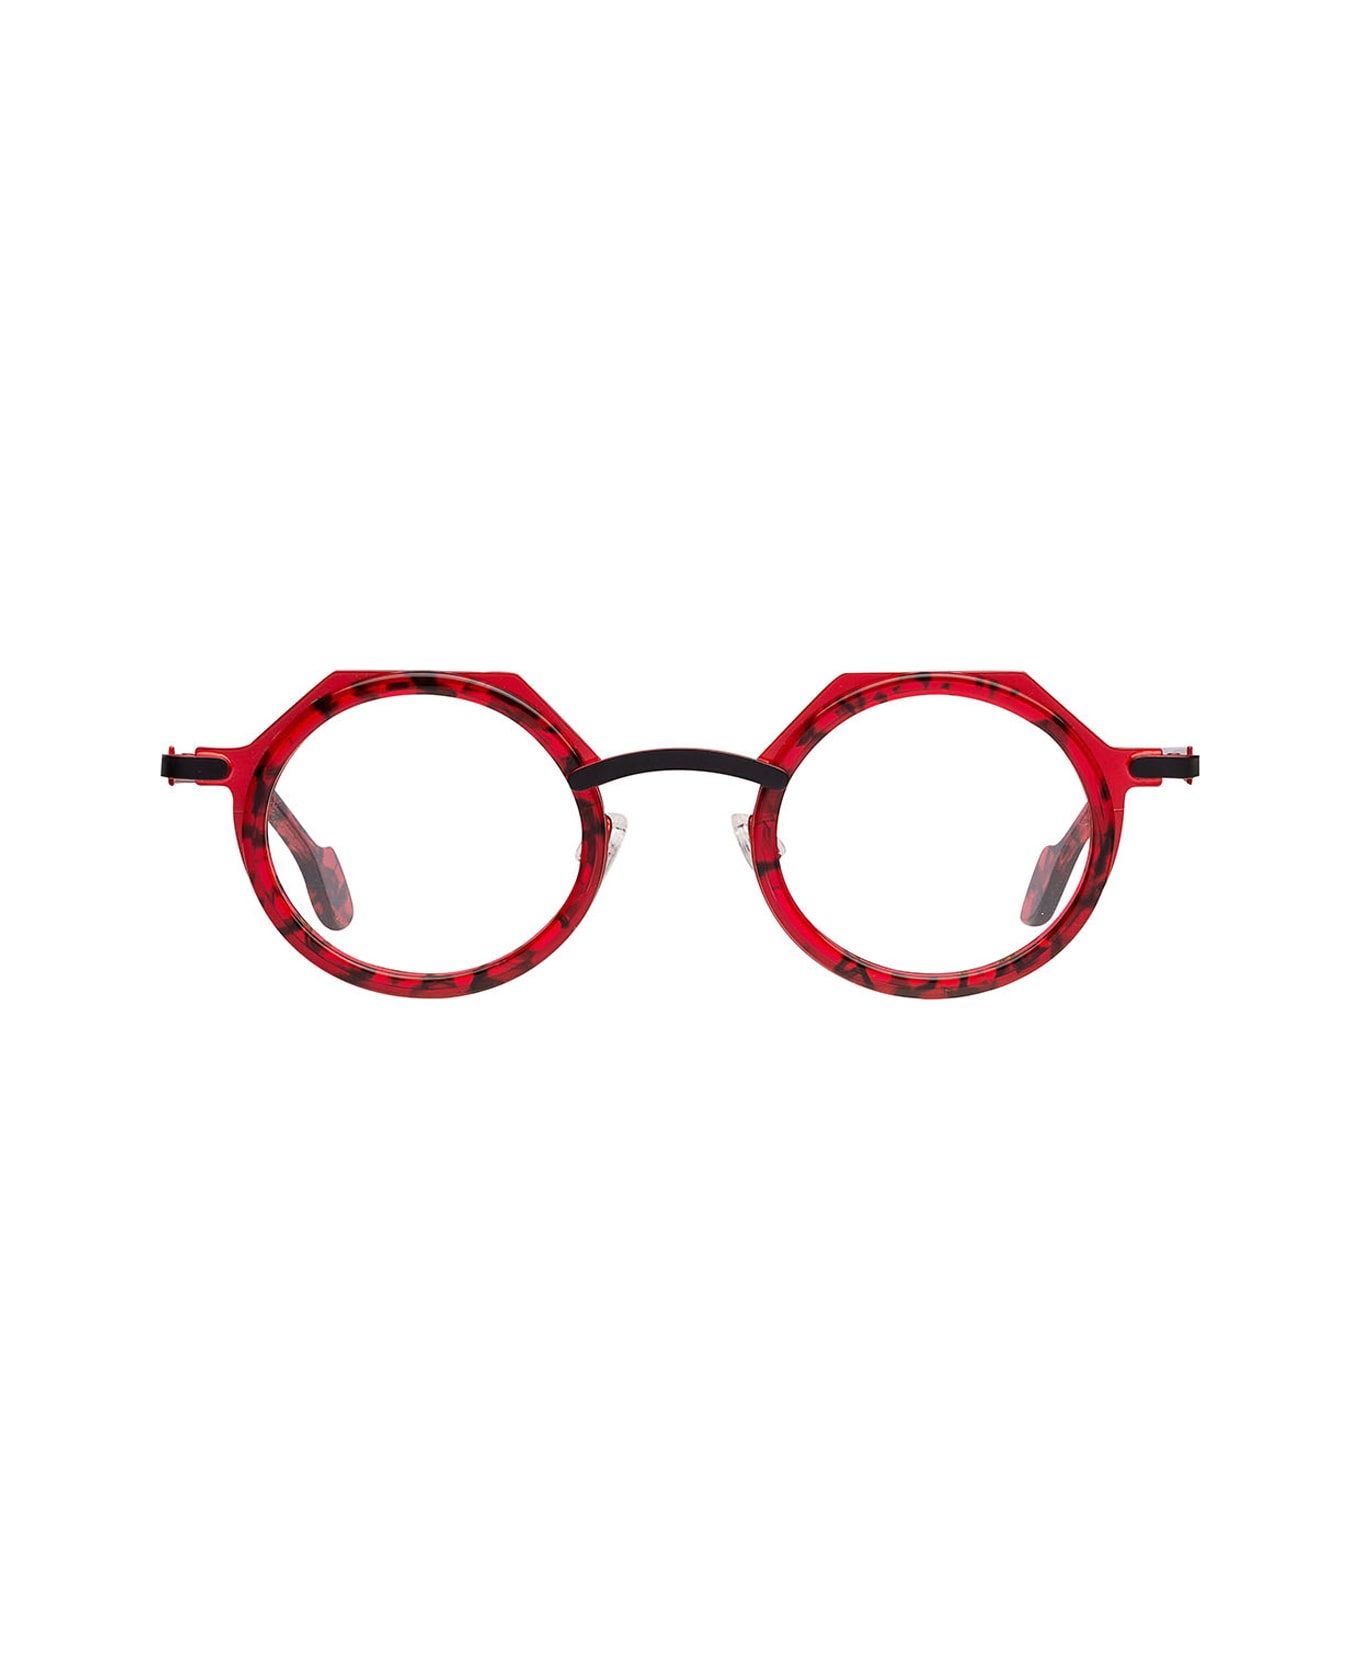 Matttew Ippon 7 Glasses - Rosso